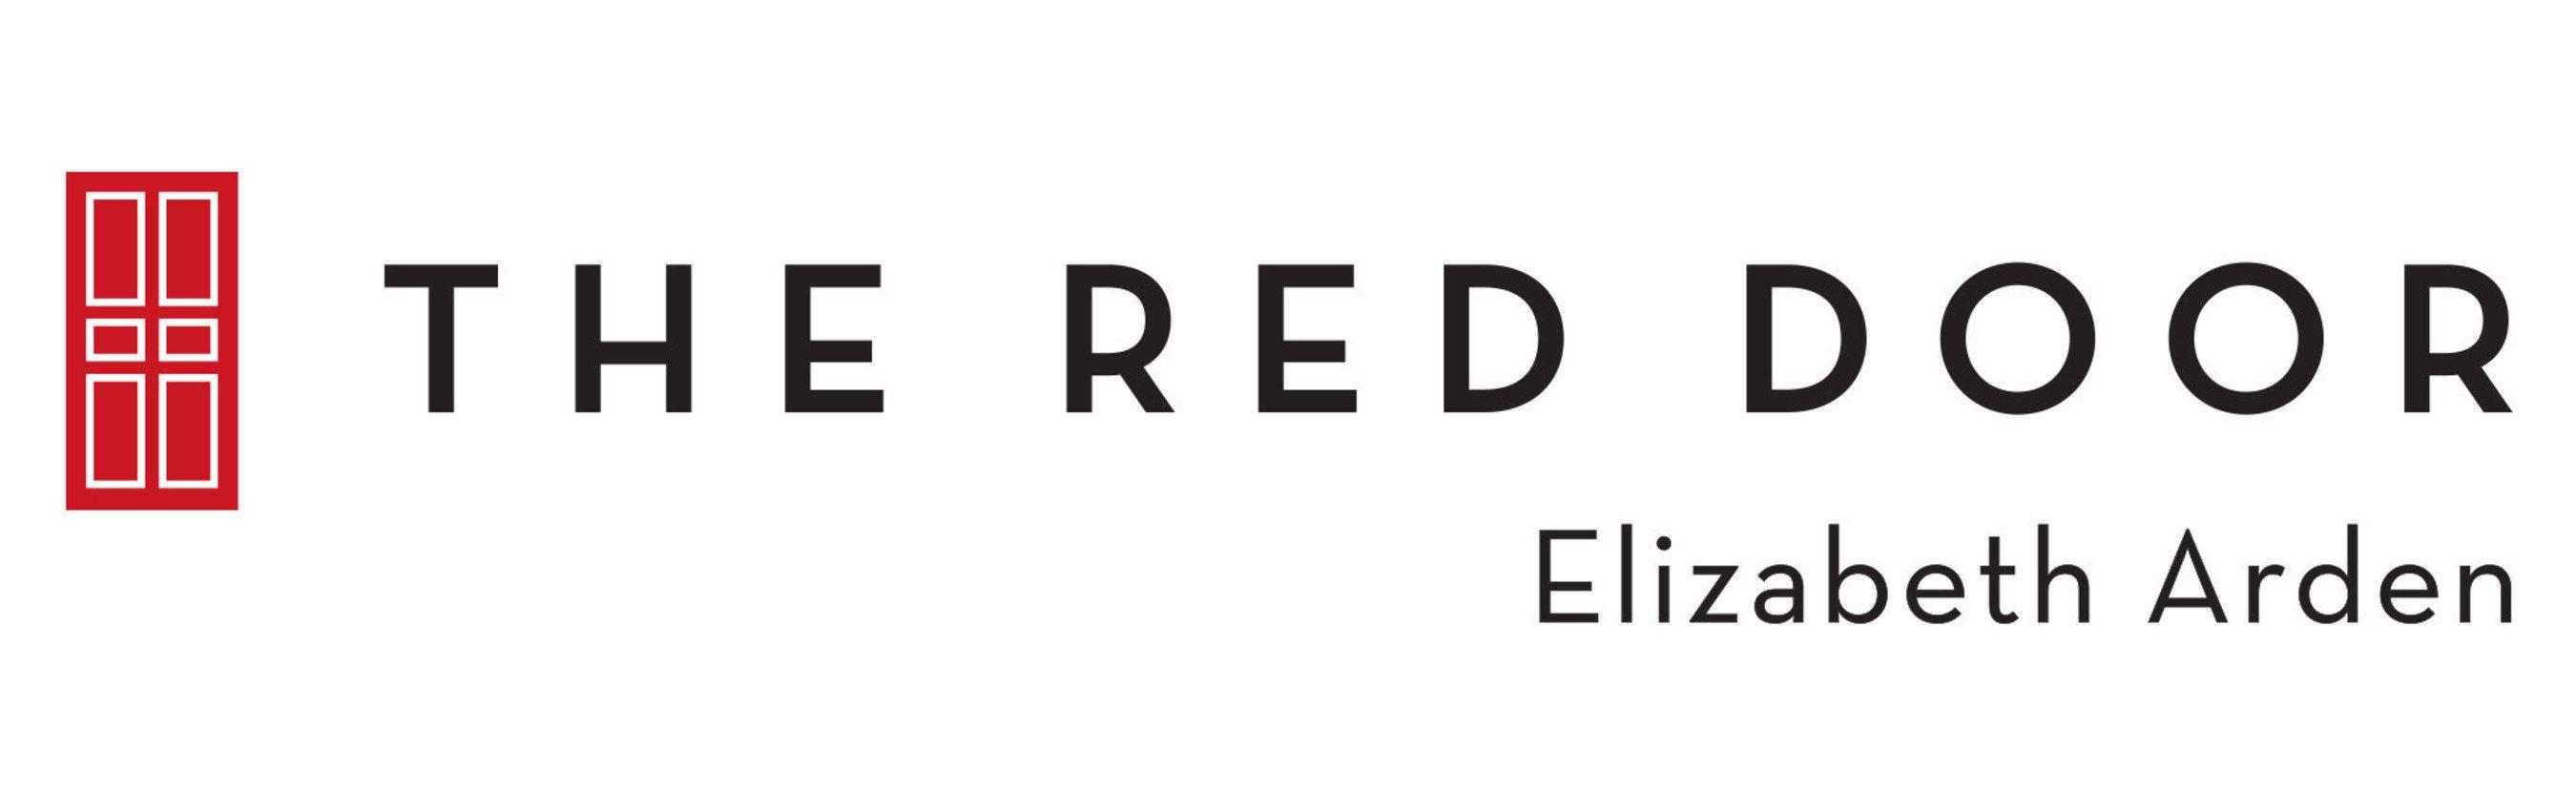 Elizabeth Arden Logo - The Red Door by Elizabeth Arden Launches New Brand Campaign & Omni